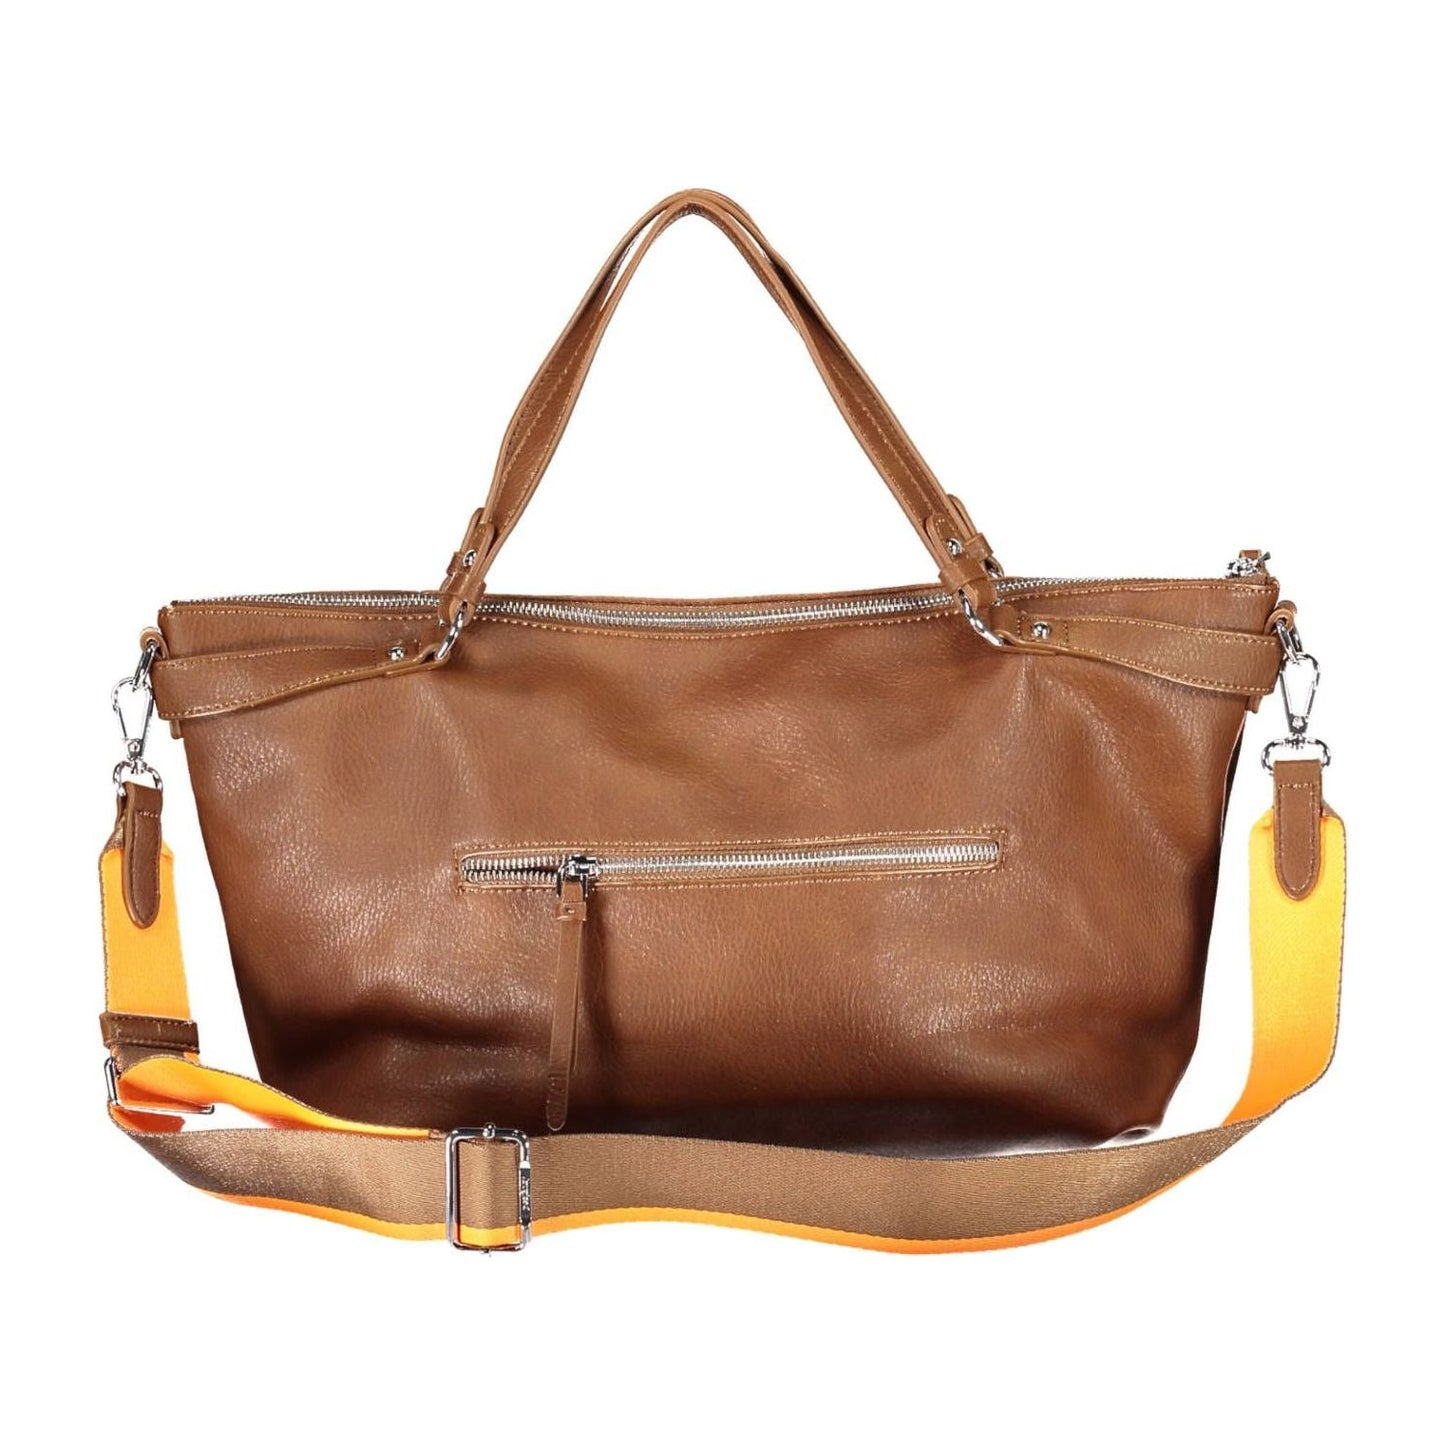 Desigual Chic Brown Polyurethane Handbag with Versatile Straps chic-brown-polyurethane-handbag-with-versatile-straps